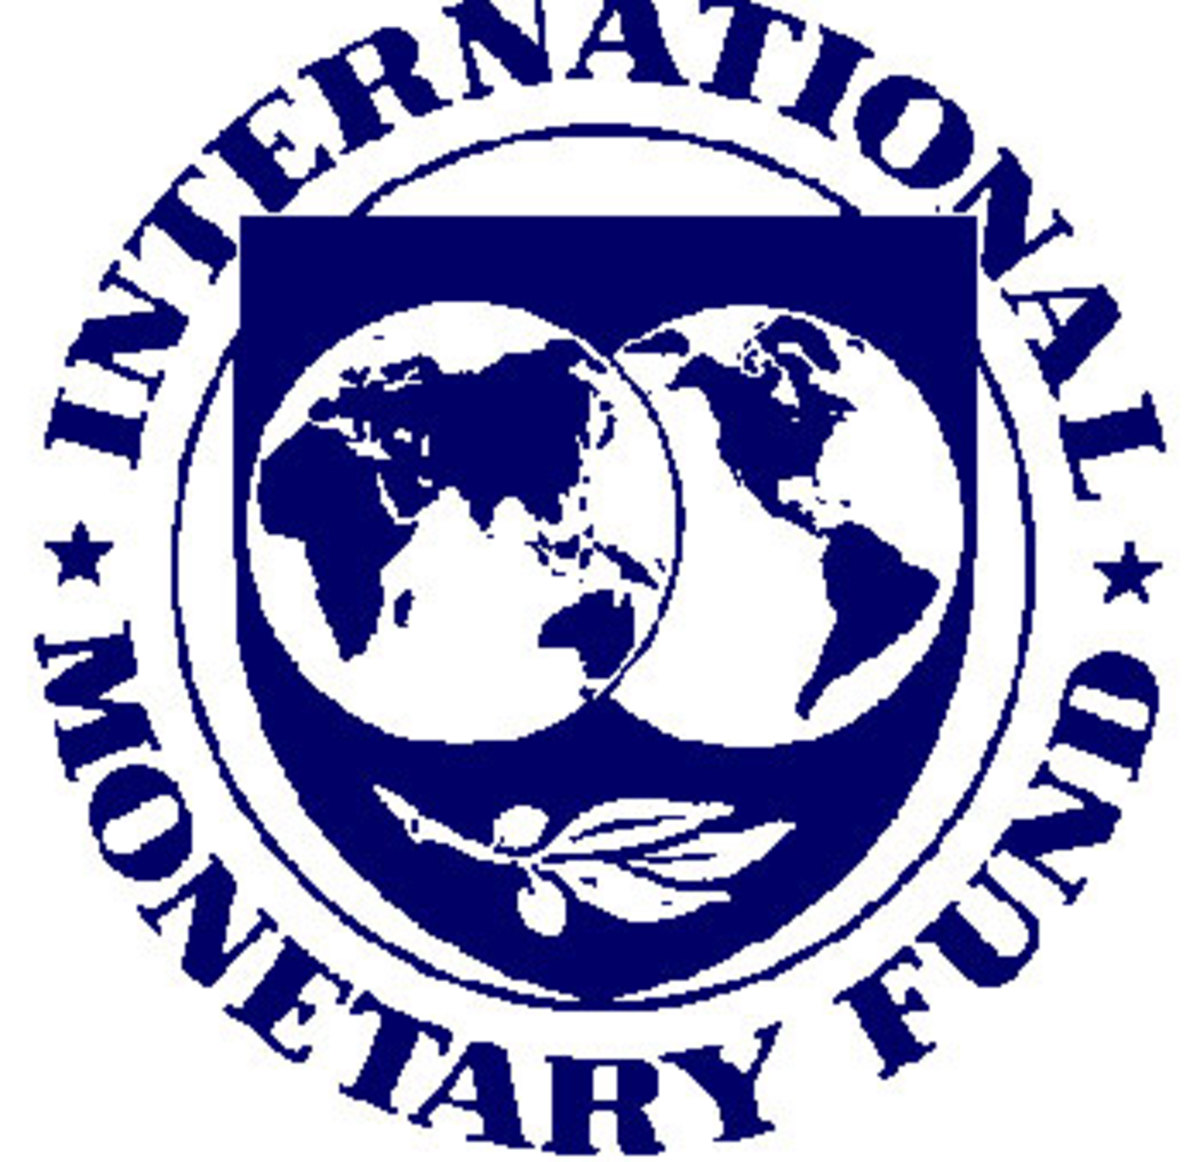 “Plan B” του ΔΝΤ για έξοδο της Ελλάδας απ’ το ευρώ;